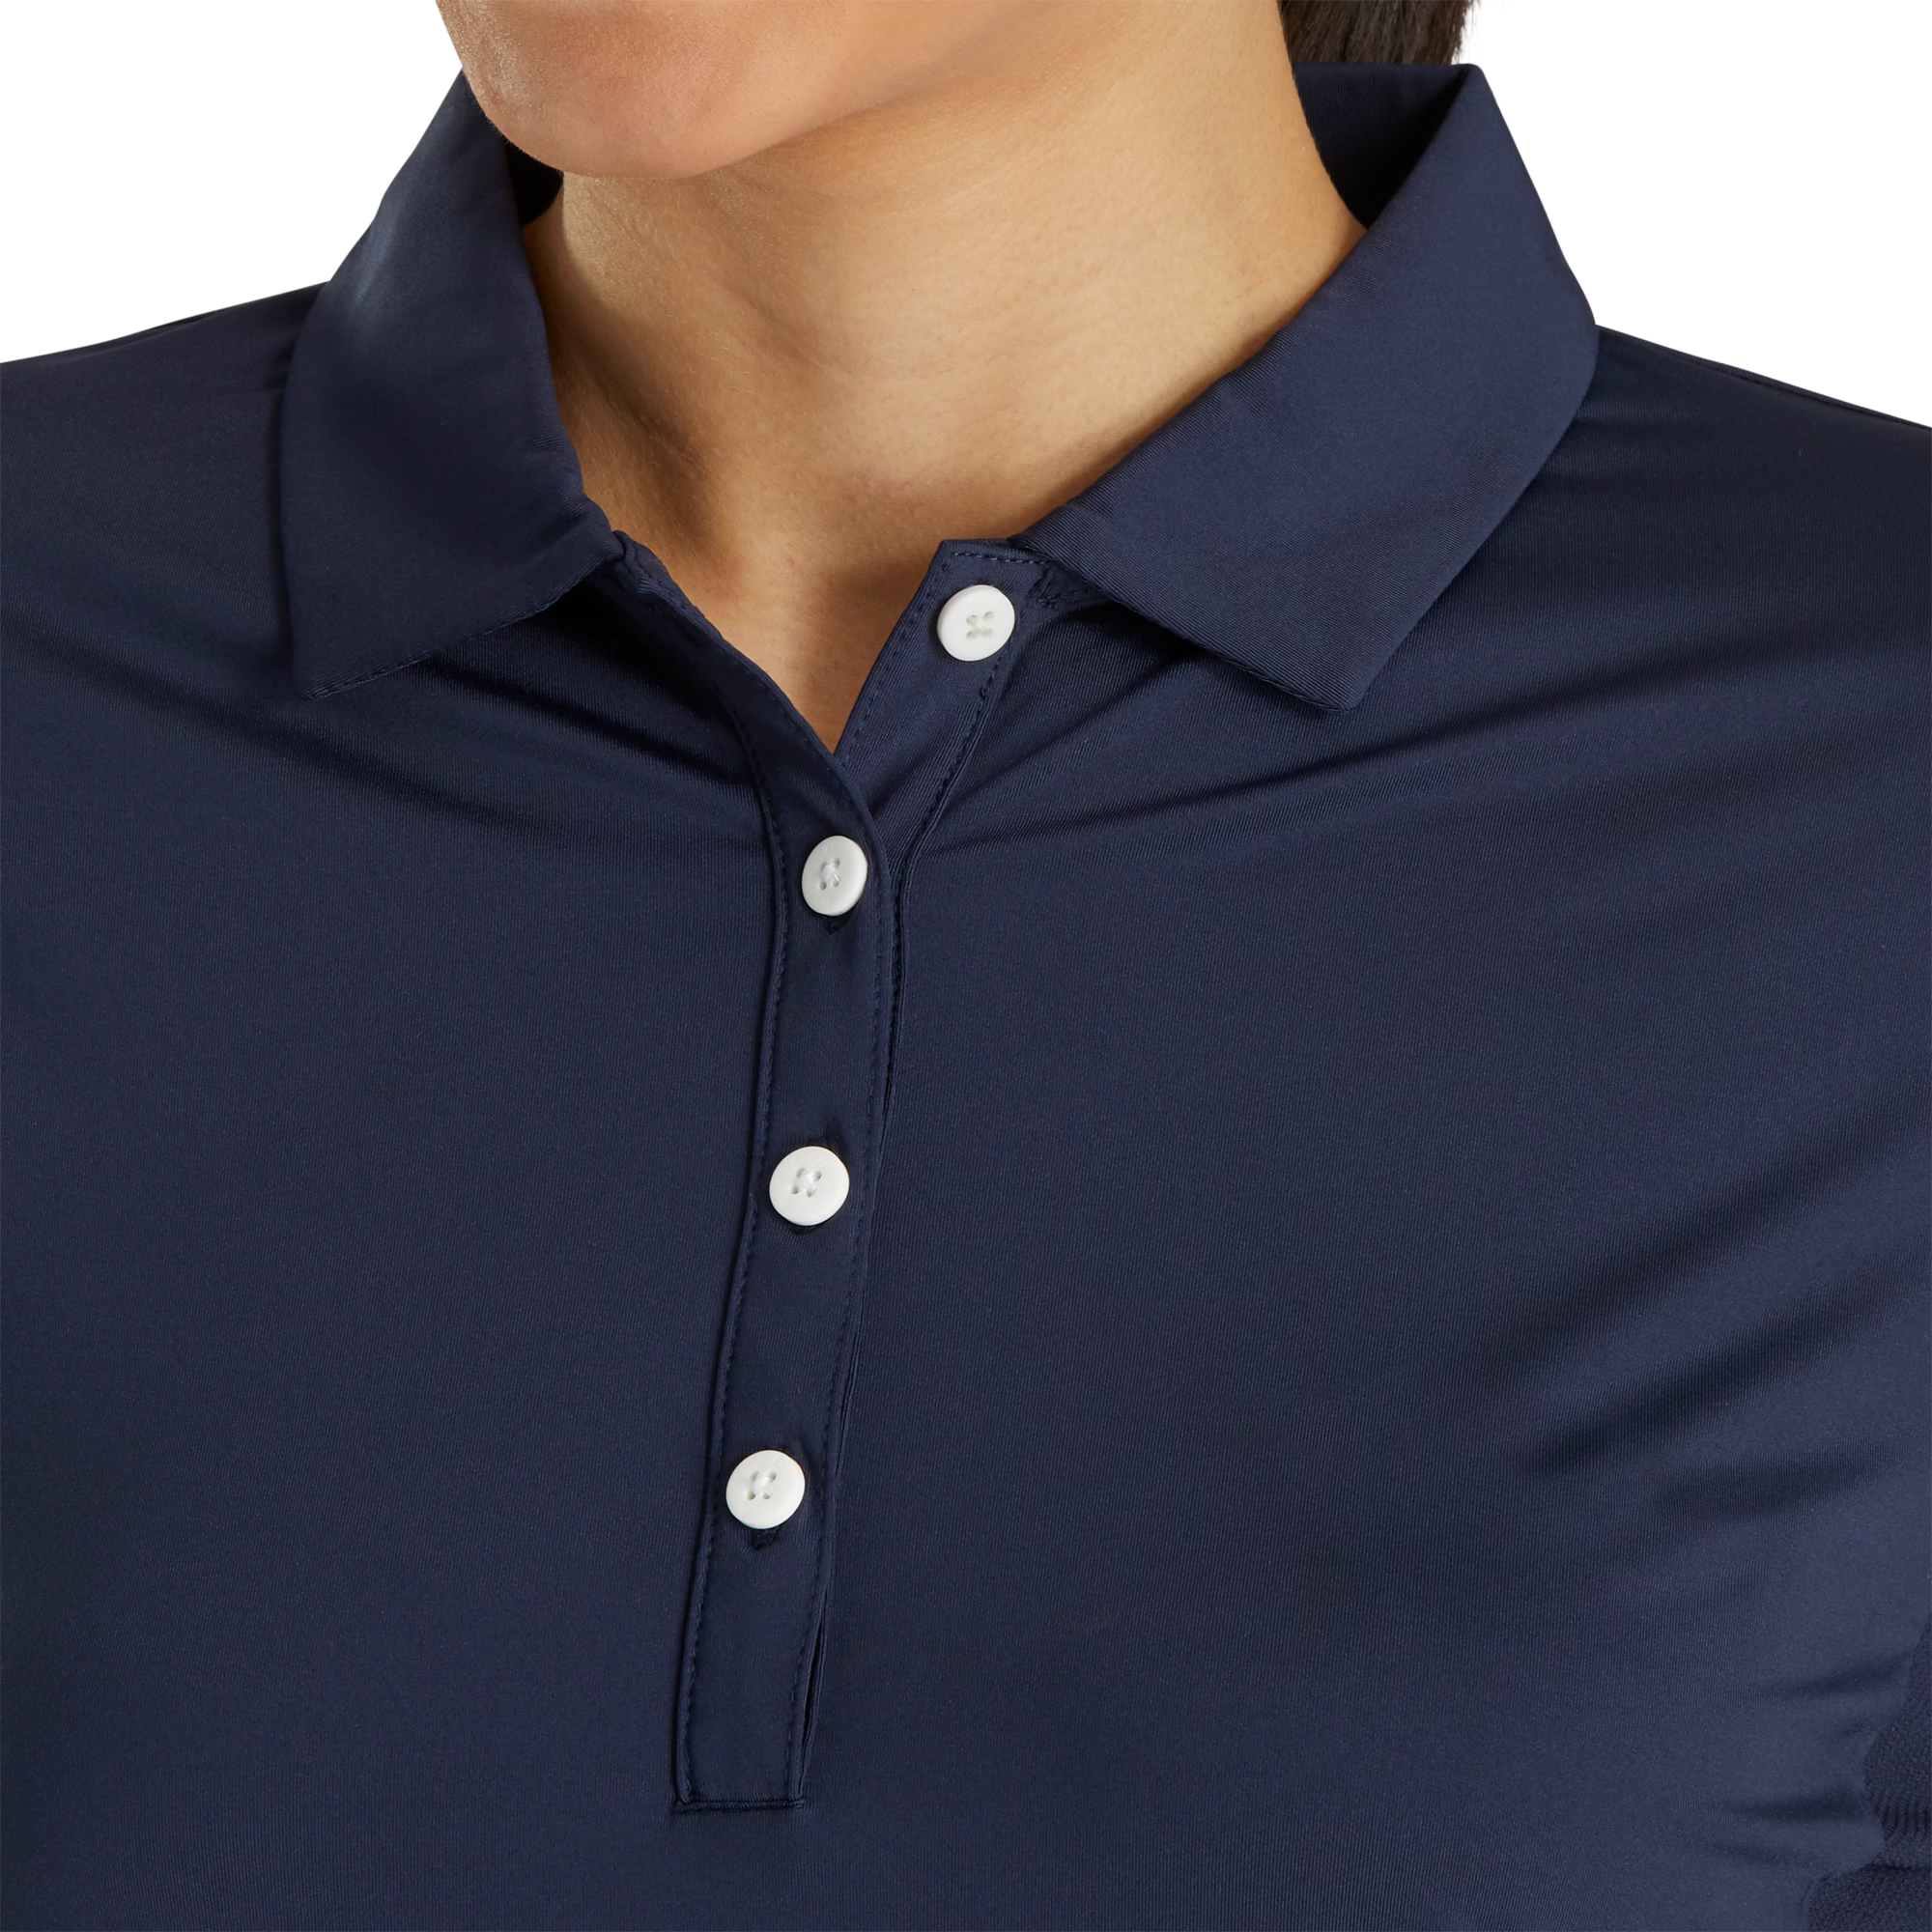 FootJoy Long Sleeve Solid Jersey Shirt